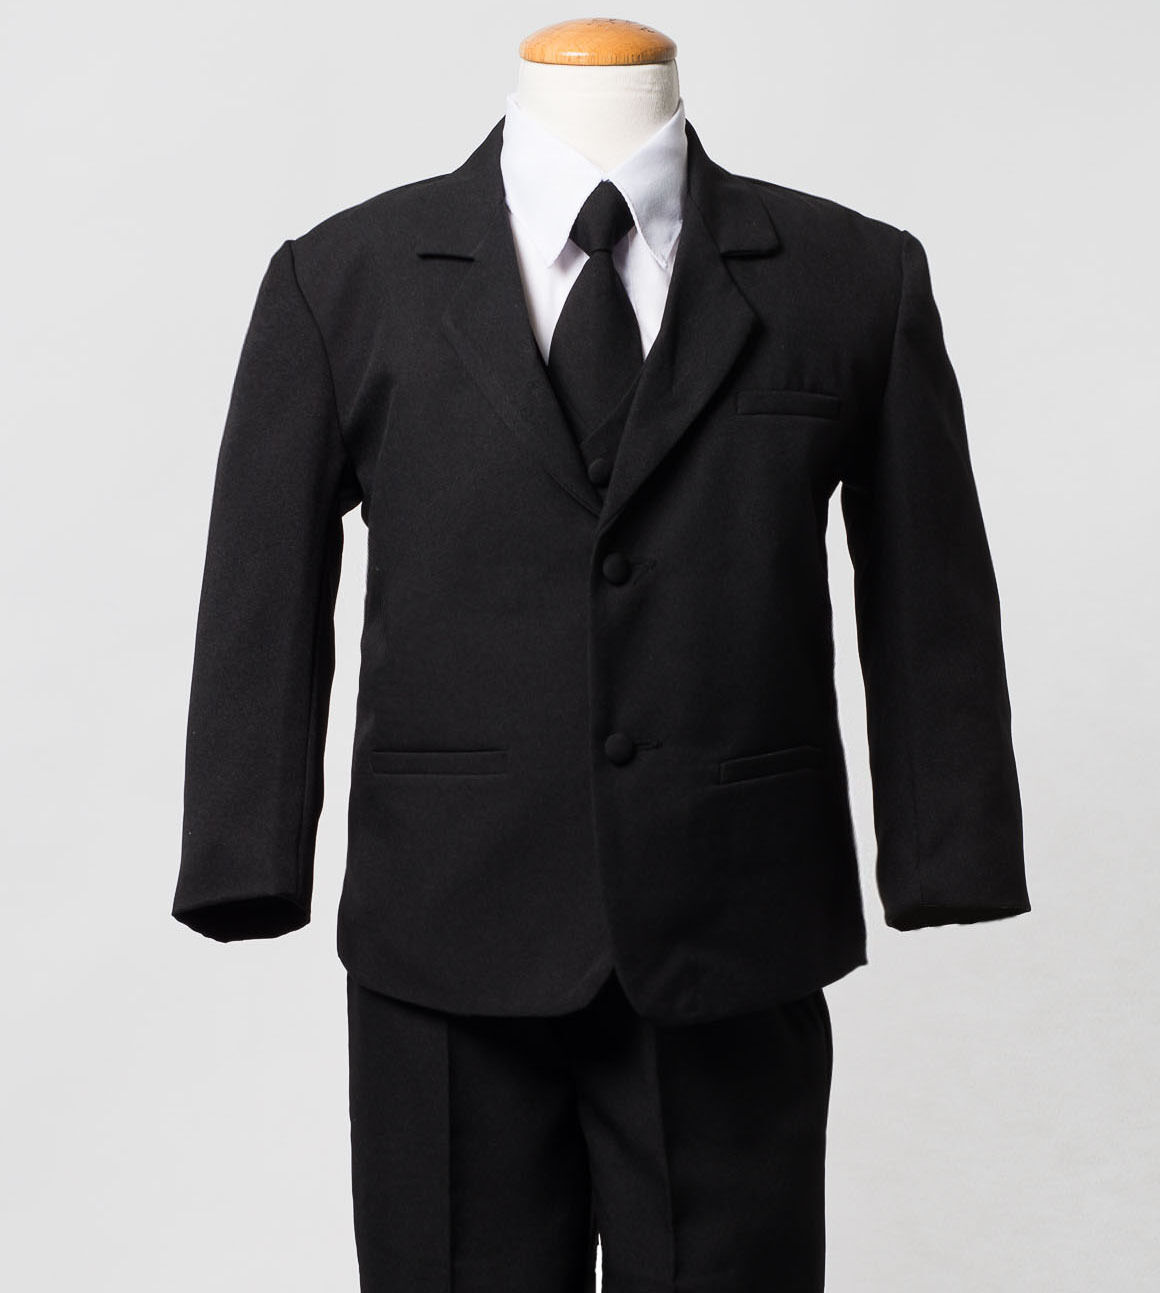 Boys Formal Black Suit 5 Pieces Set Toddler Size 2T to 14 Без бренда - фотография #3